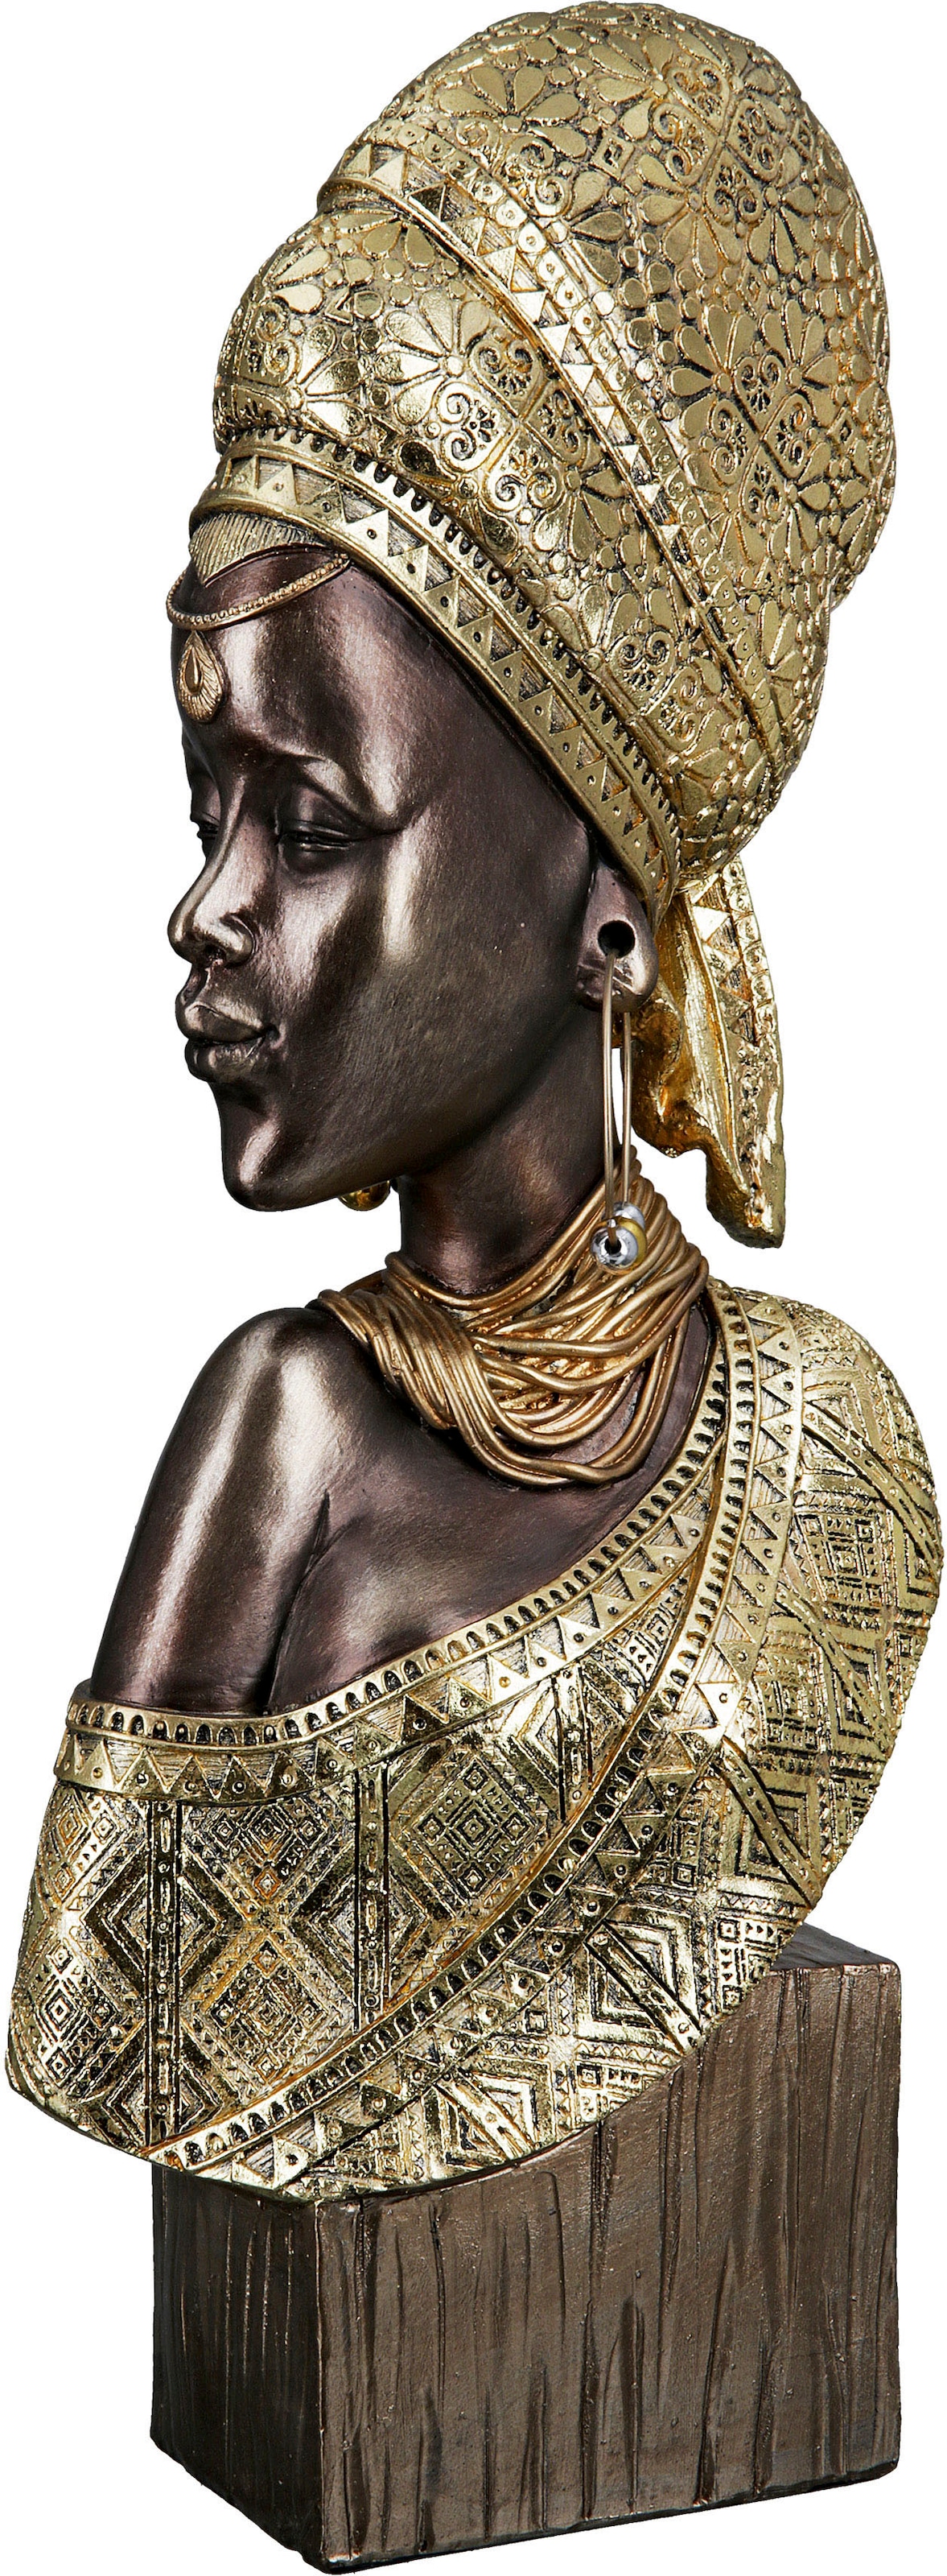 GILDE Afrikafigur »Figur Raten kaufen auf Shari«